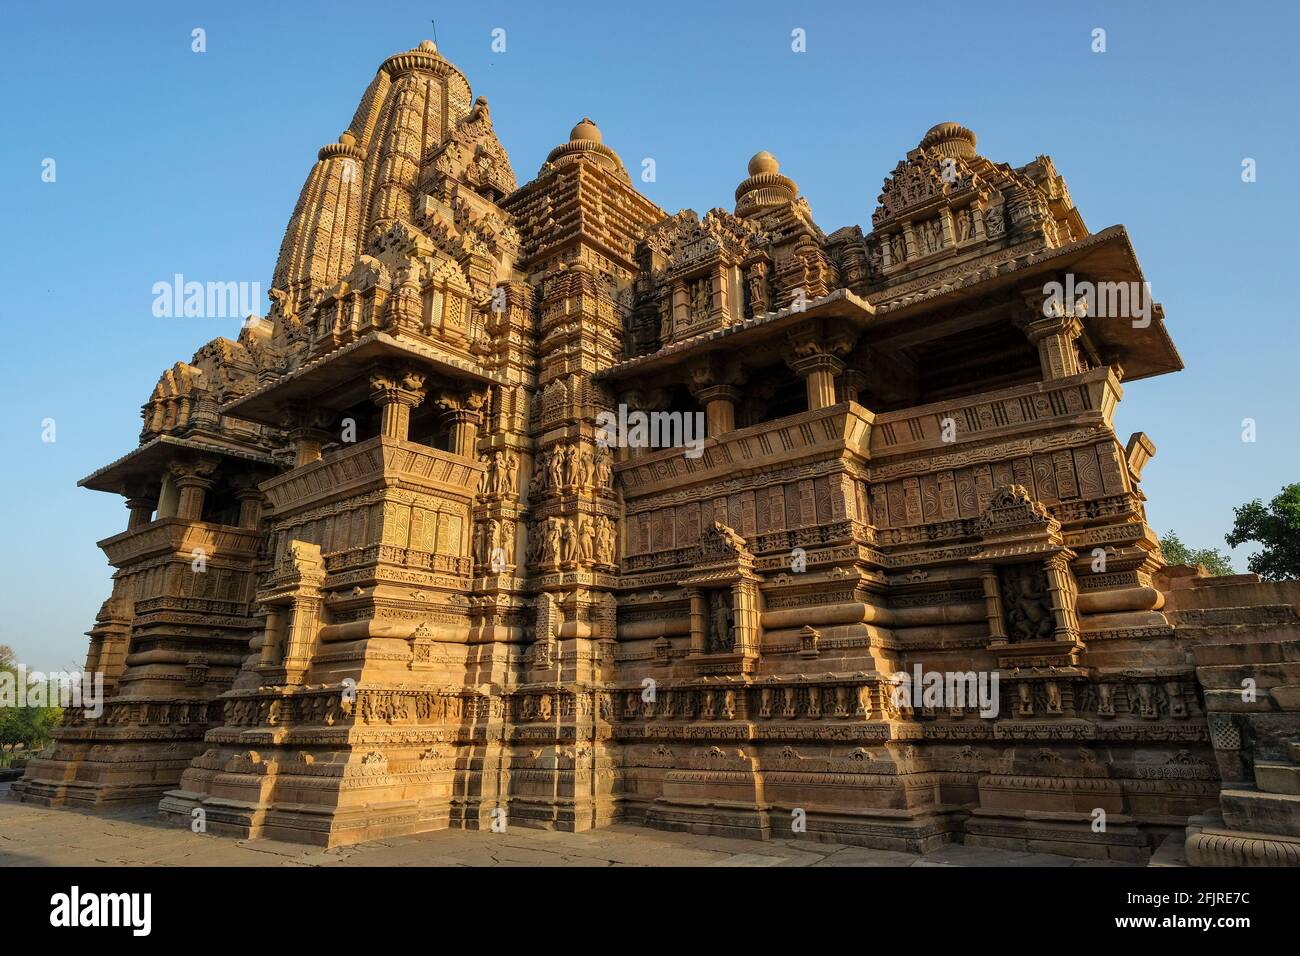 Premium Photo | Erotic temple in khajuraho madhya pradesh india